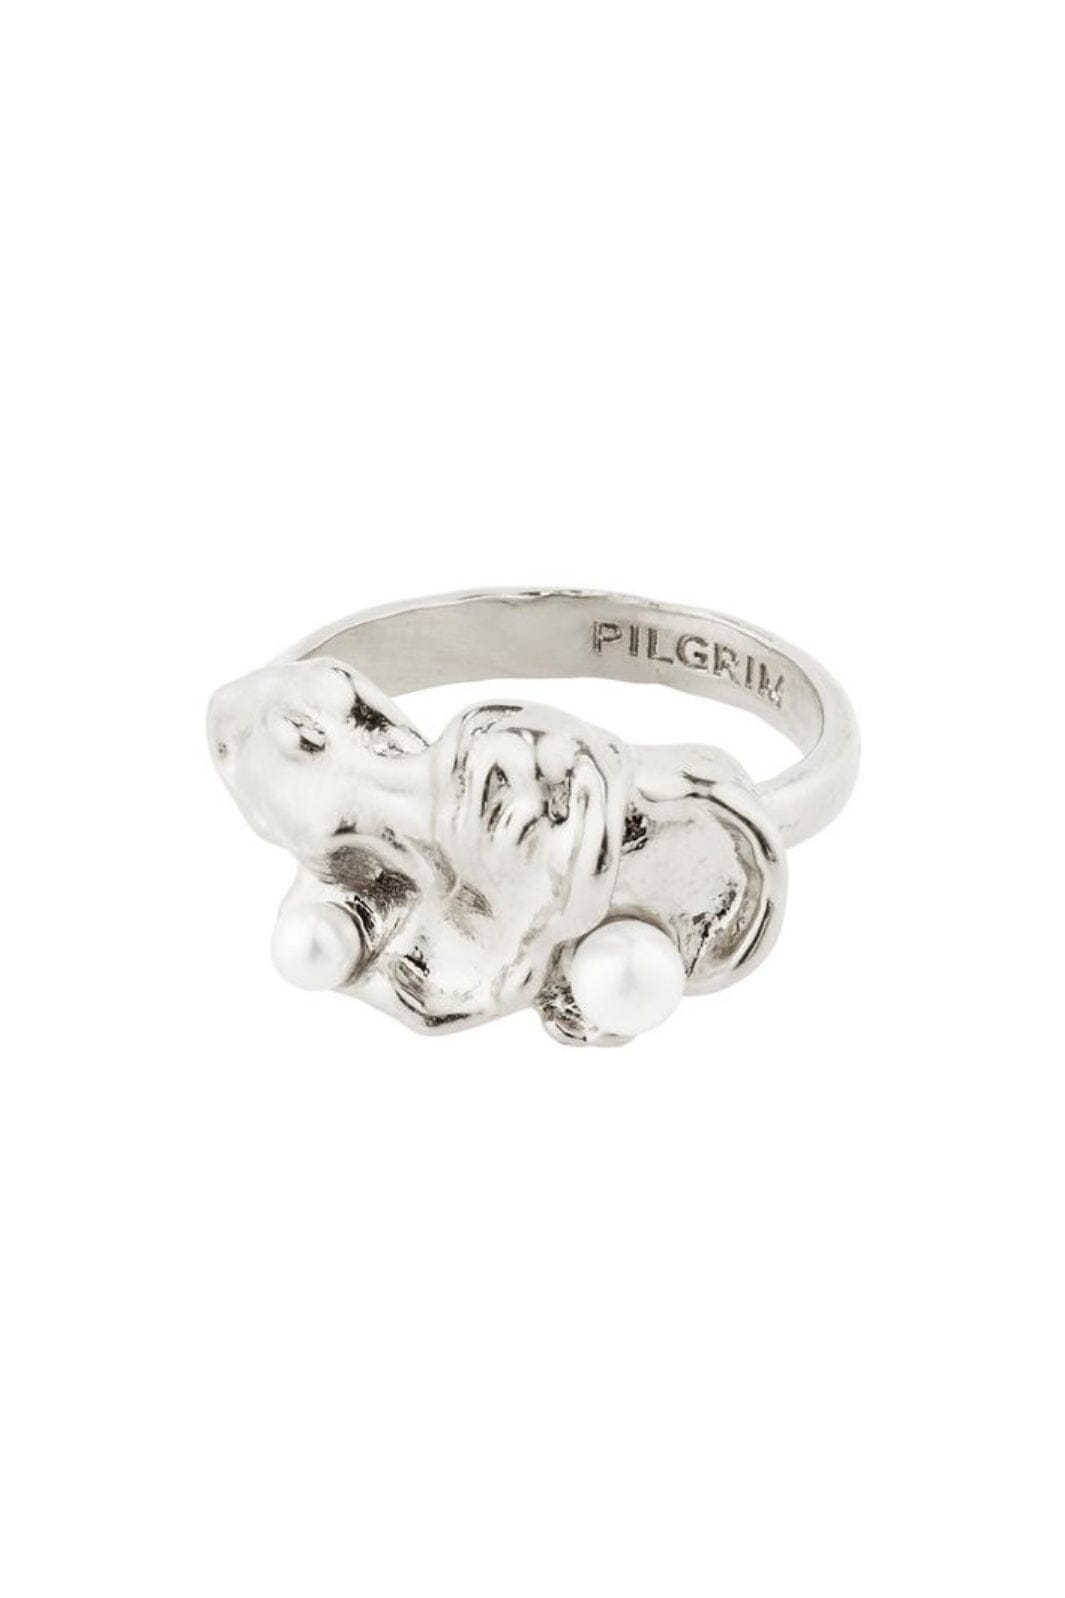 Pilgrim - Moon 102416004 - Silver Plated Ringe 